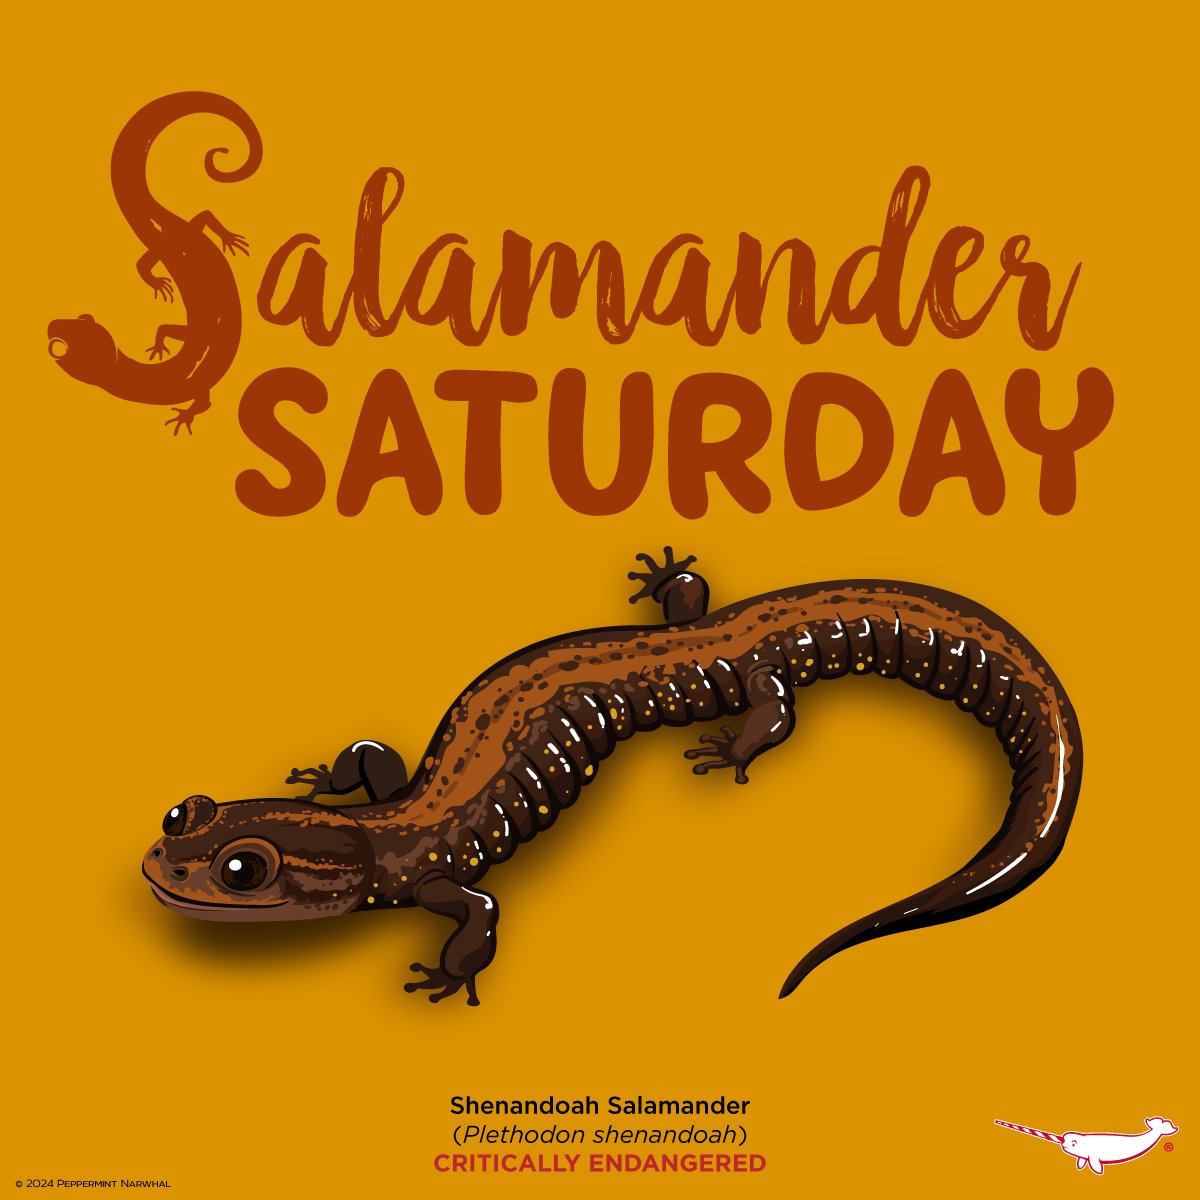 #SalamanderSaturday #ShenandoahSalamander #Salamander Merch: peppermintnarwhal.com/s/search?q=sal… More cool animal merchandise Shop #PeppermintNarwhal: peppermintnarwhal.com Int'l Shoppers visit our store on Etsy: etsy.com/shop/Peppermin… #Plethodon